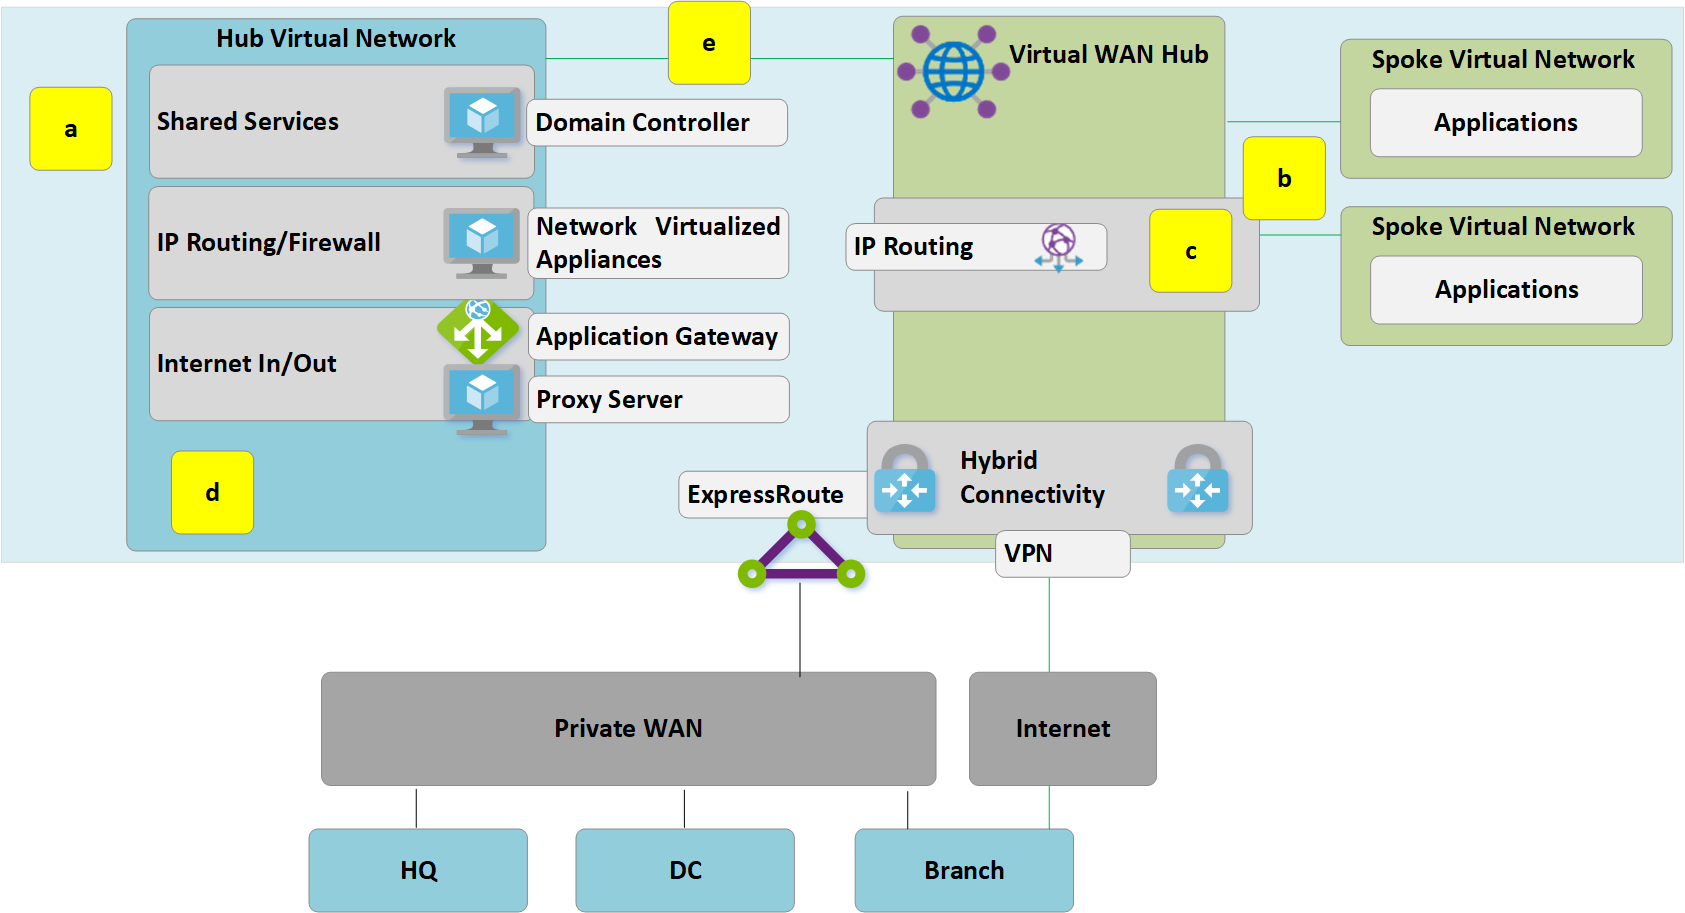 Transition connectivity to Virtual WAN hub